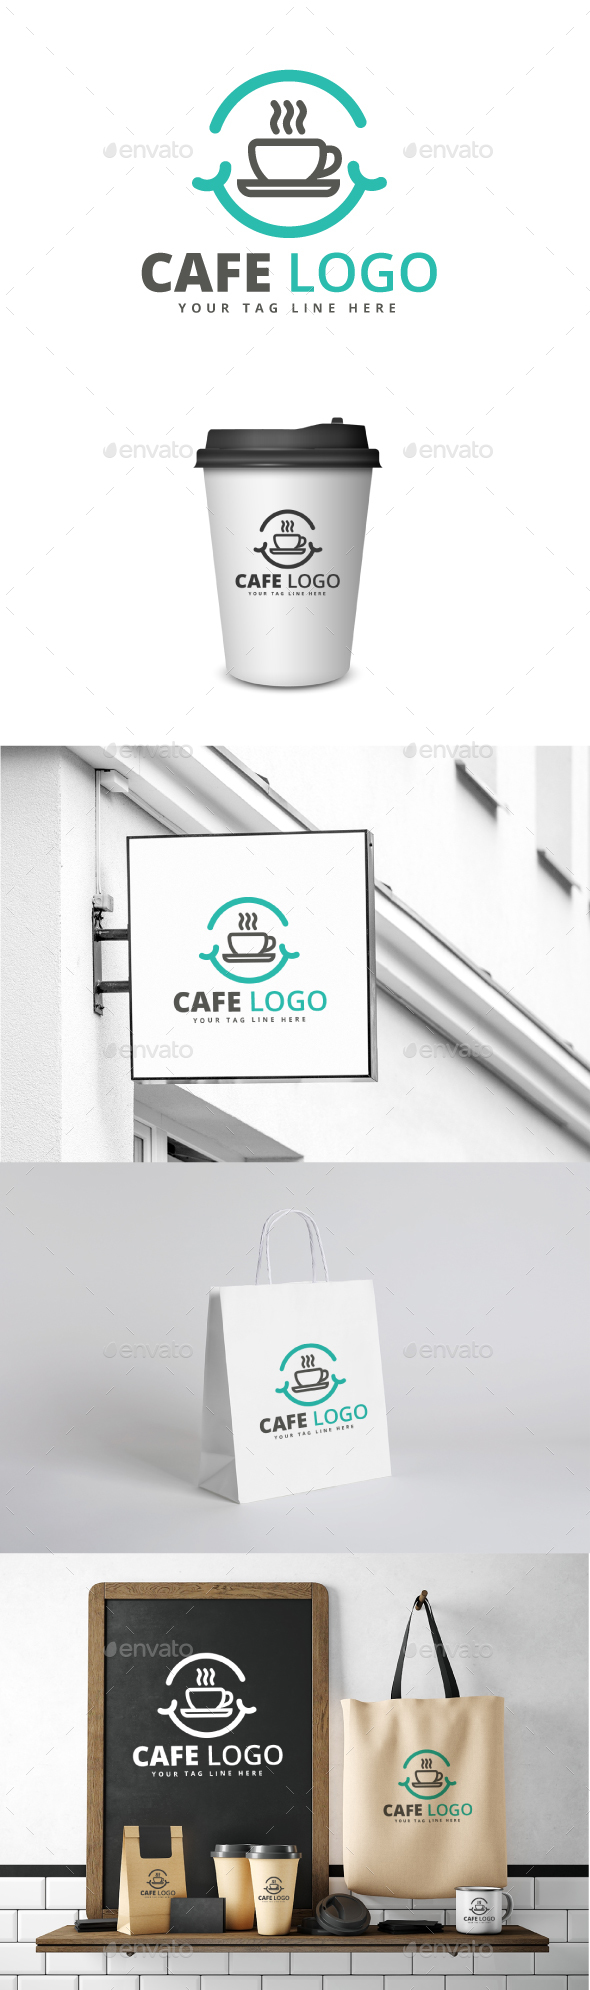 Cafe and Coffee Logo Design